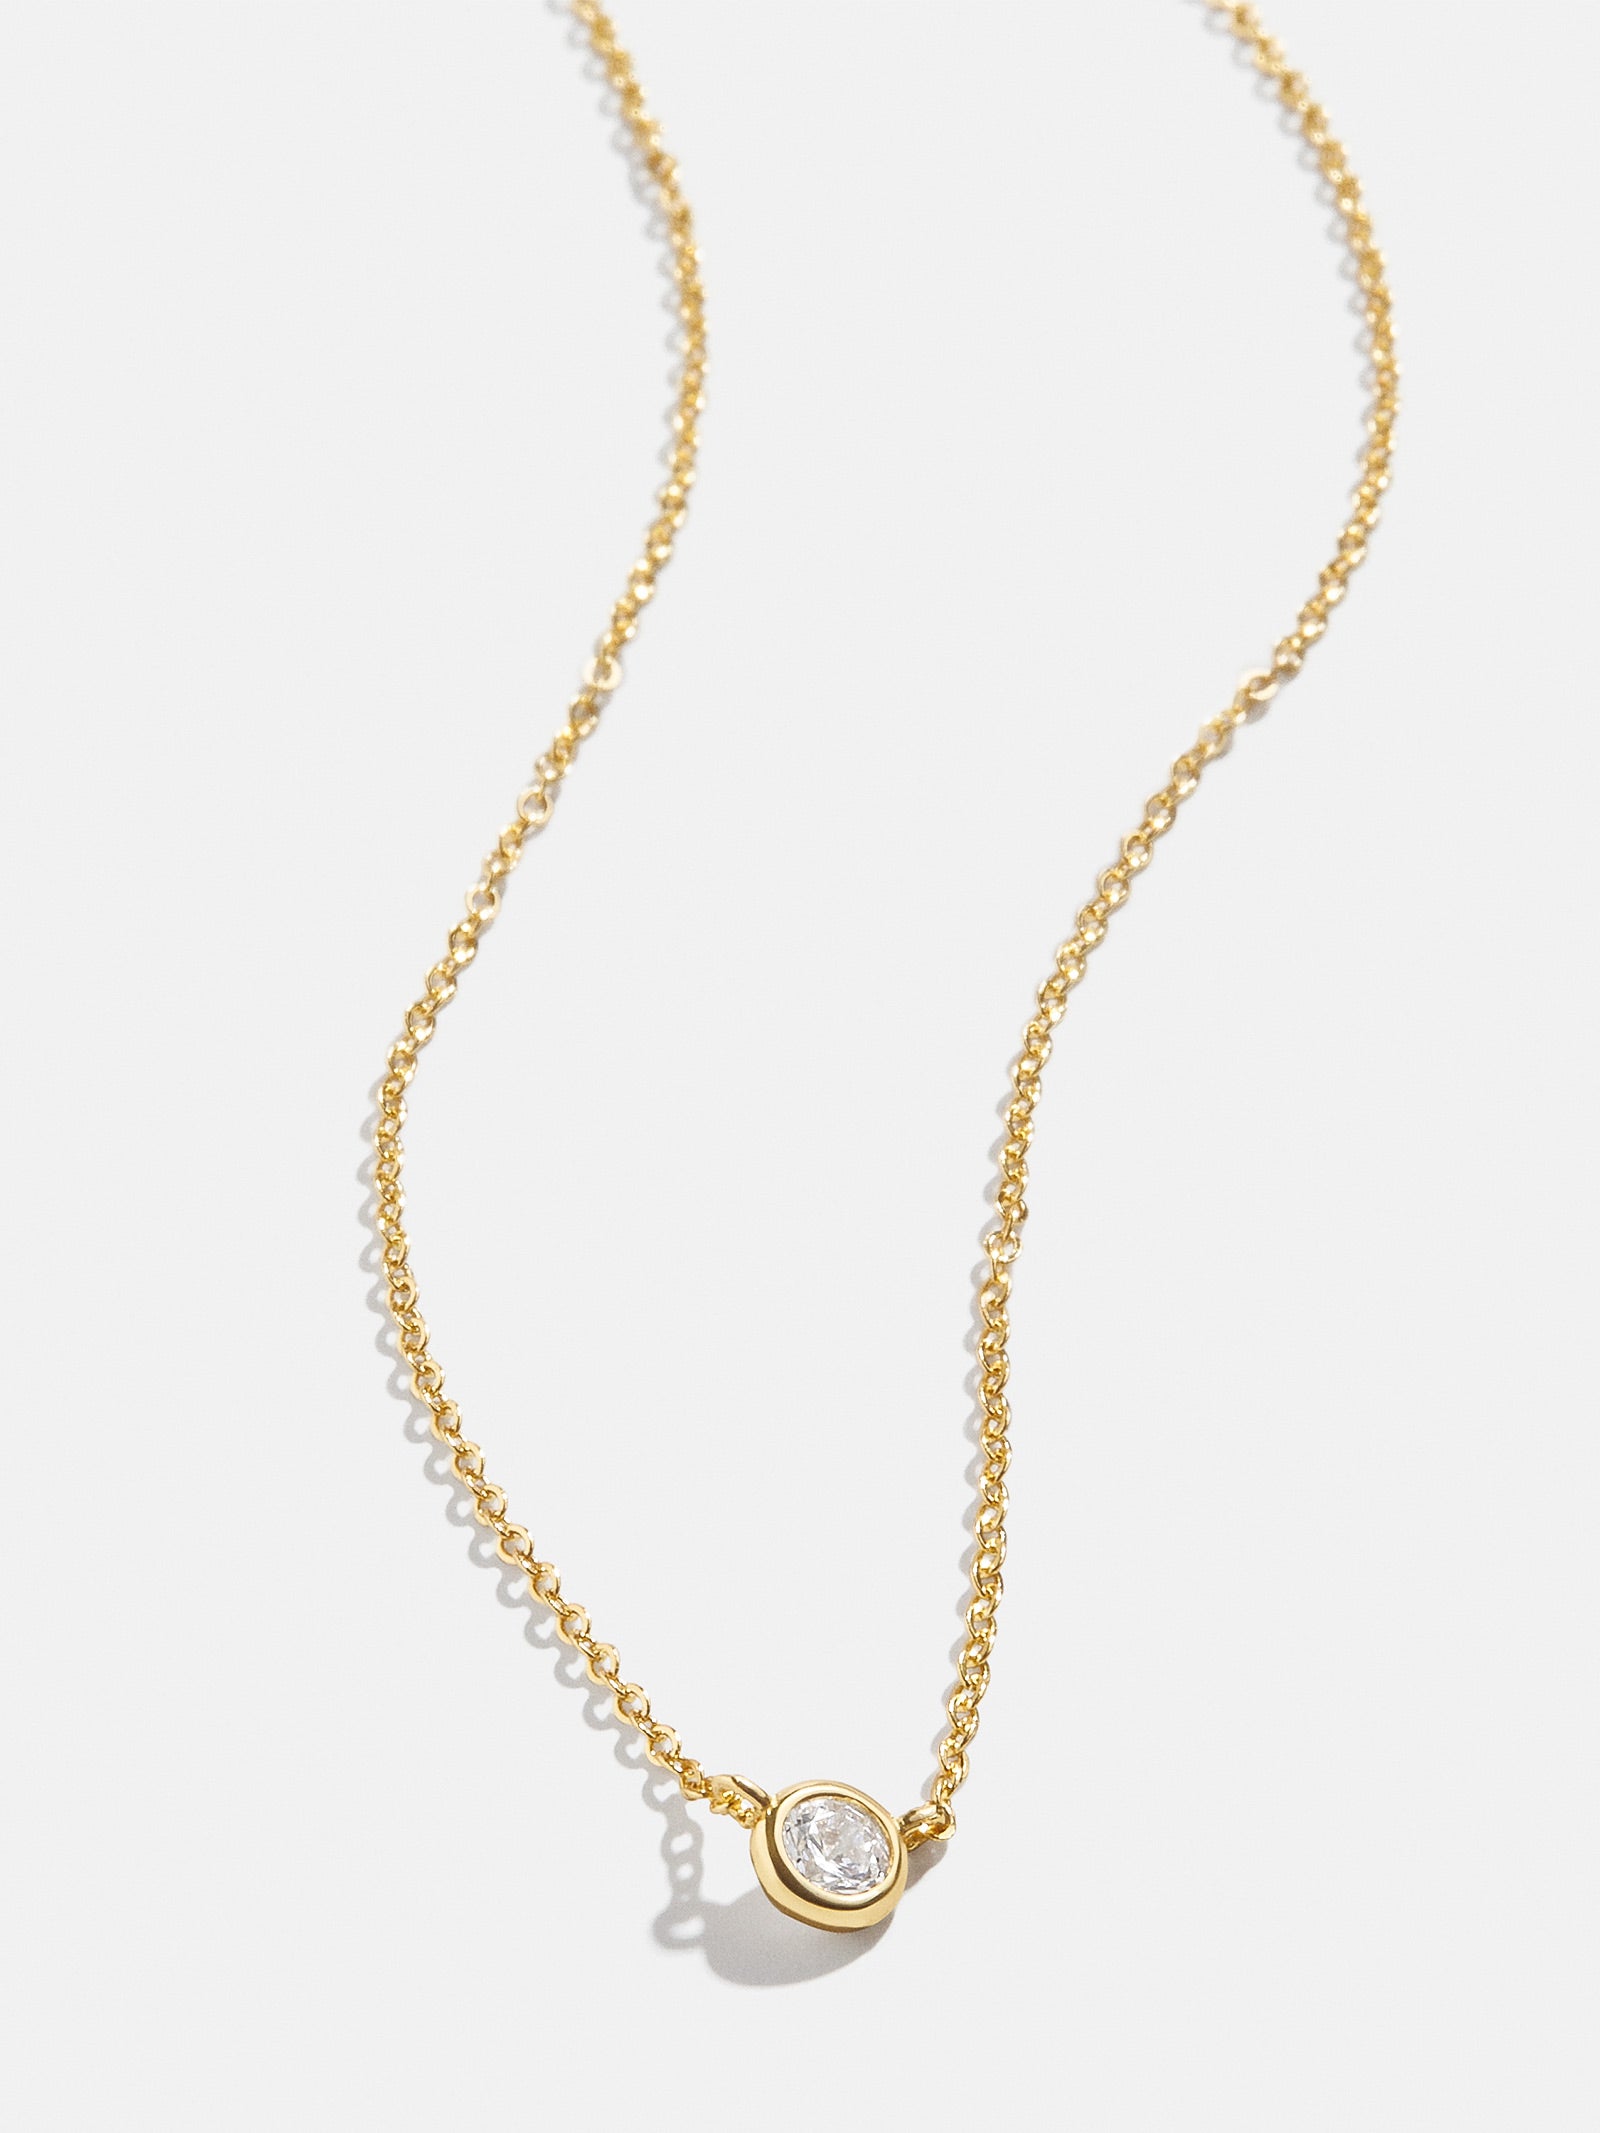 Baublebar Sada 18K Gold Necklace - Gold